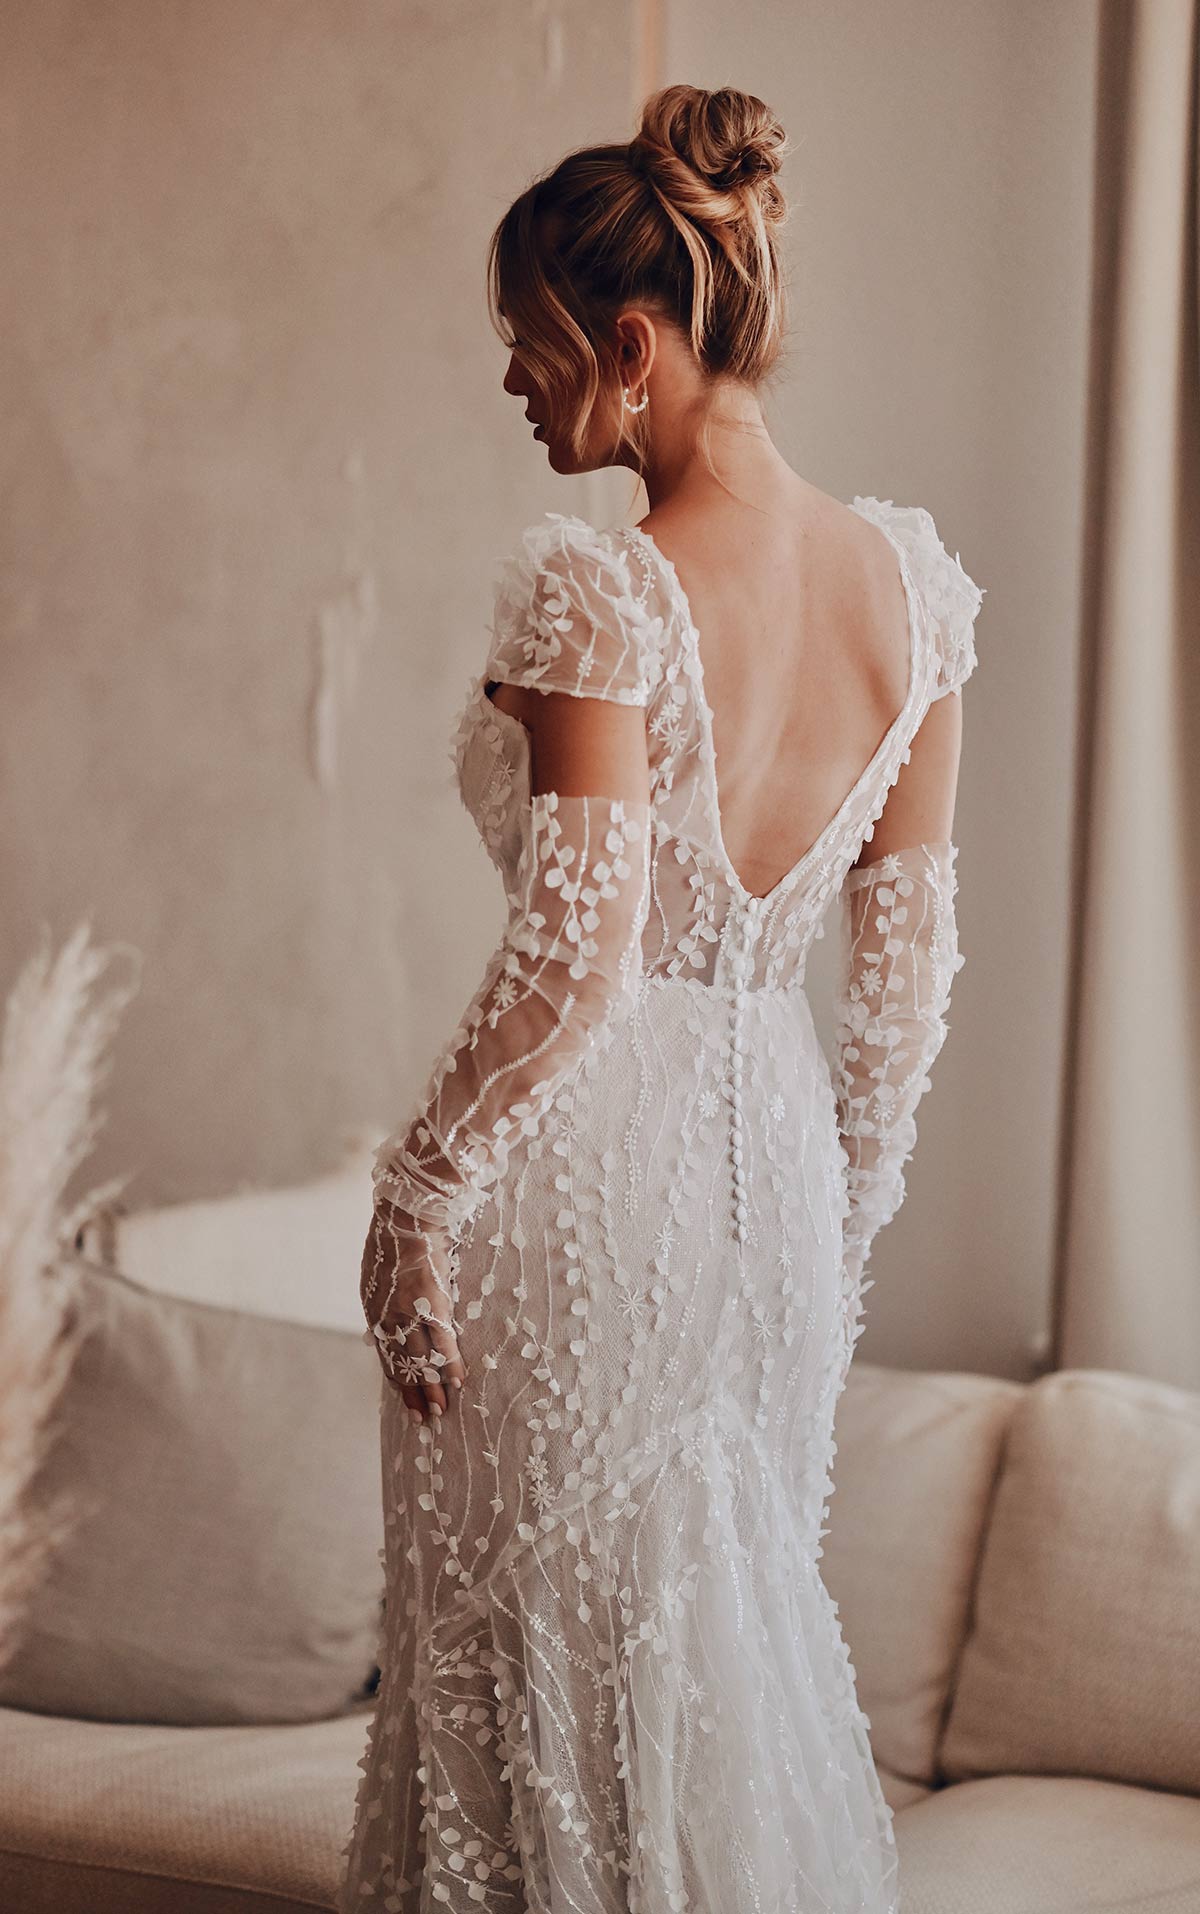 3D Lace wedding dress